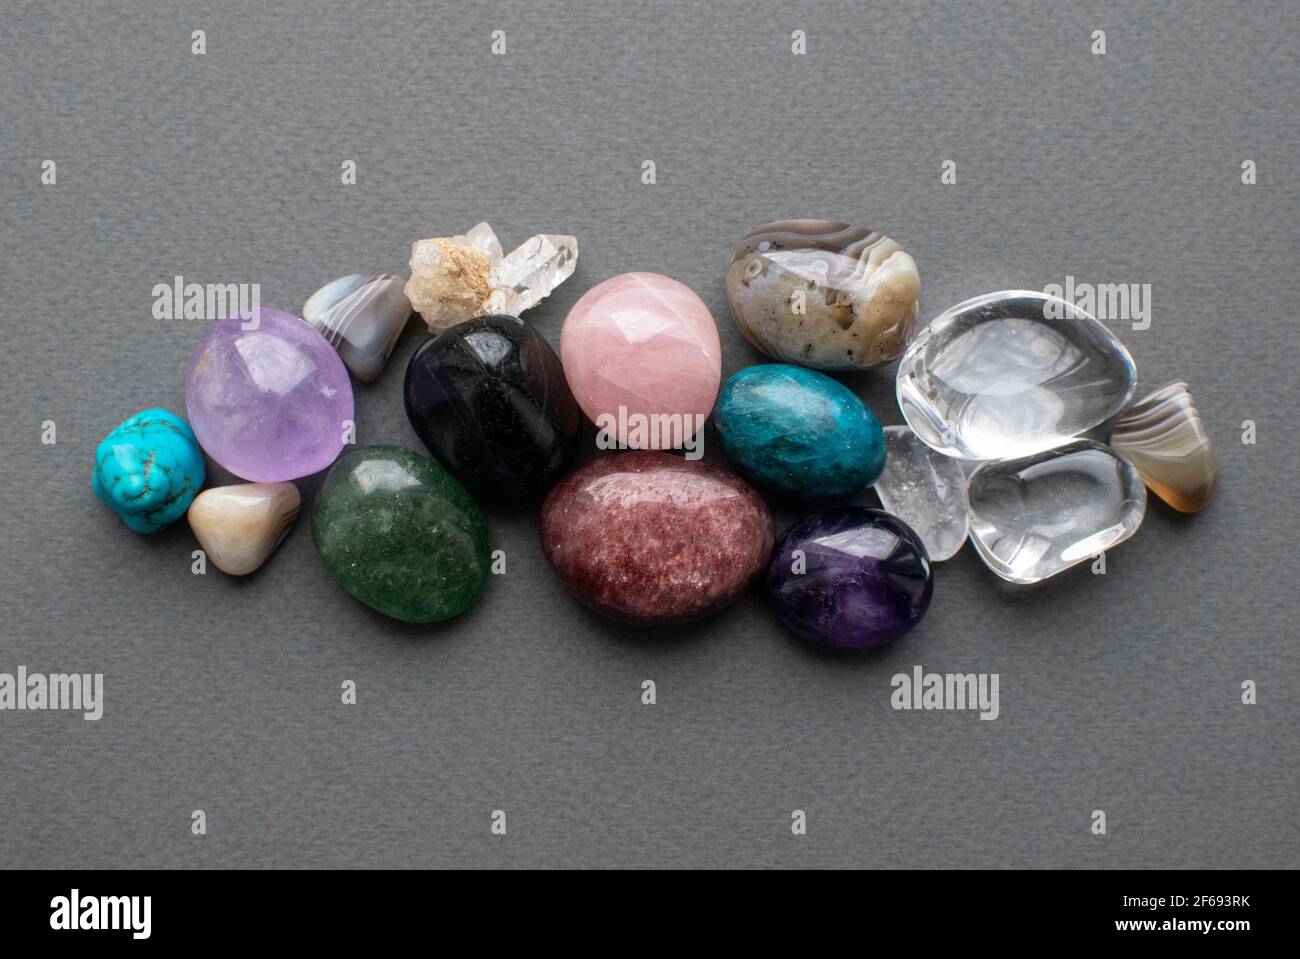 Tumbled gems of various colors. Amethyst, rose quartz, agate, apatite, aventurine, rock crystal, turquoise. Stock Photo